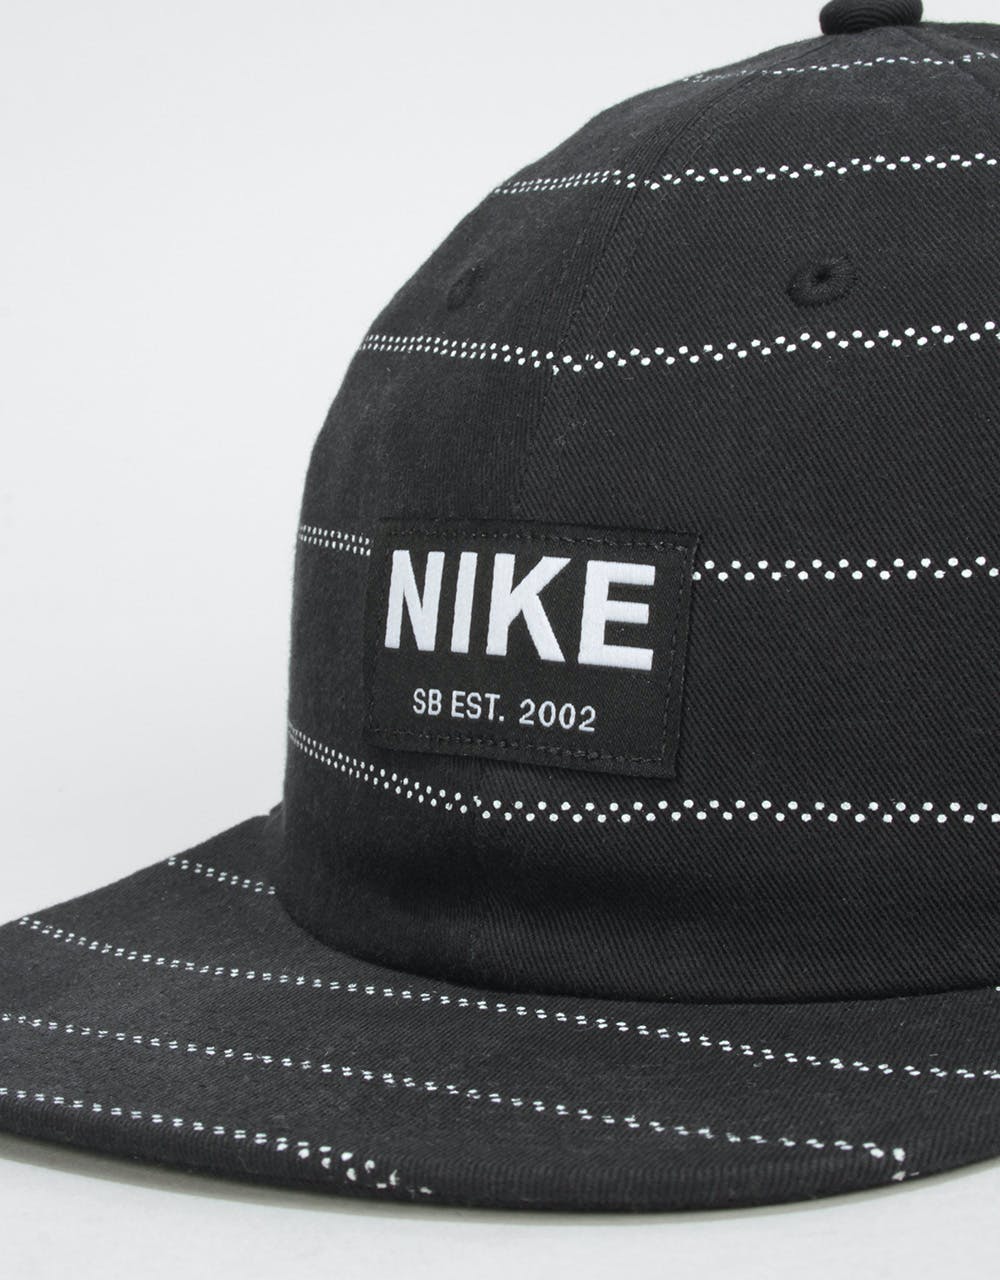 Nike SB H86 Flatbill Cap - Black